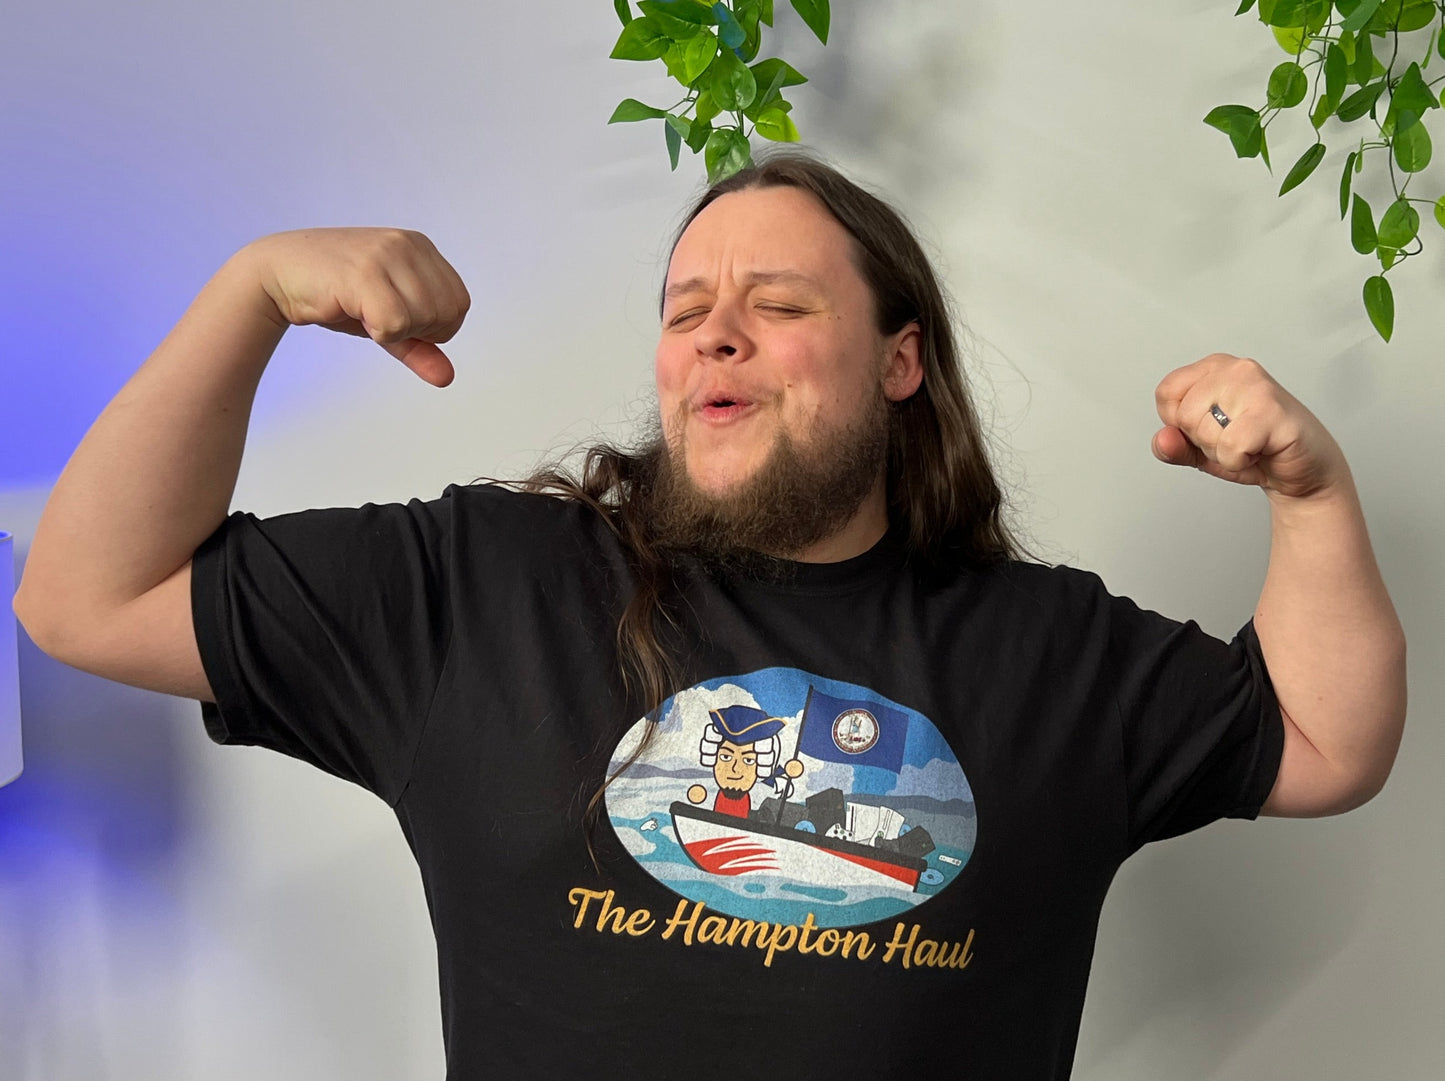 The Hampton Haul T-Shirt